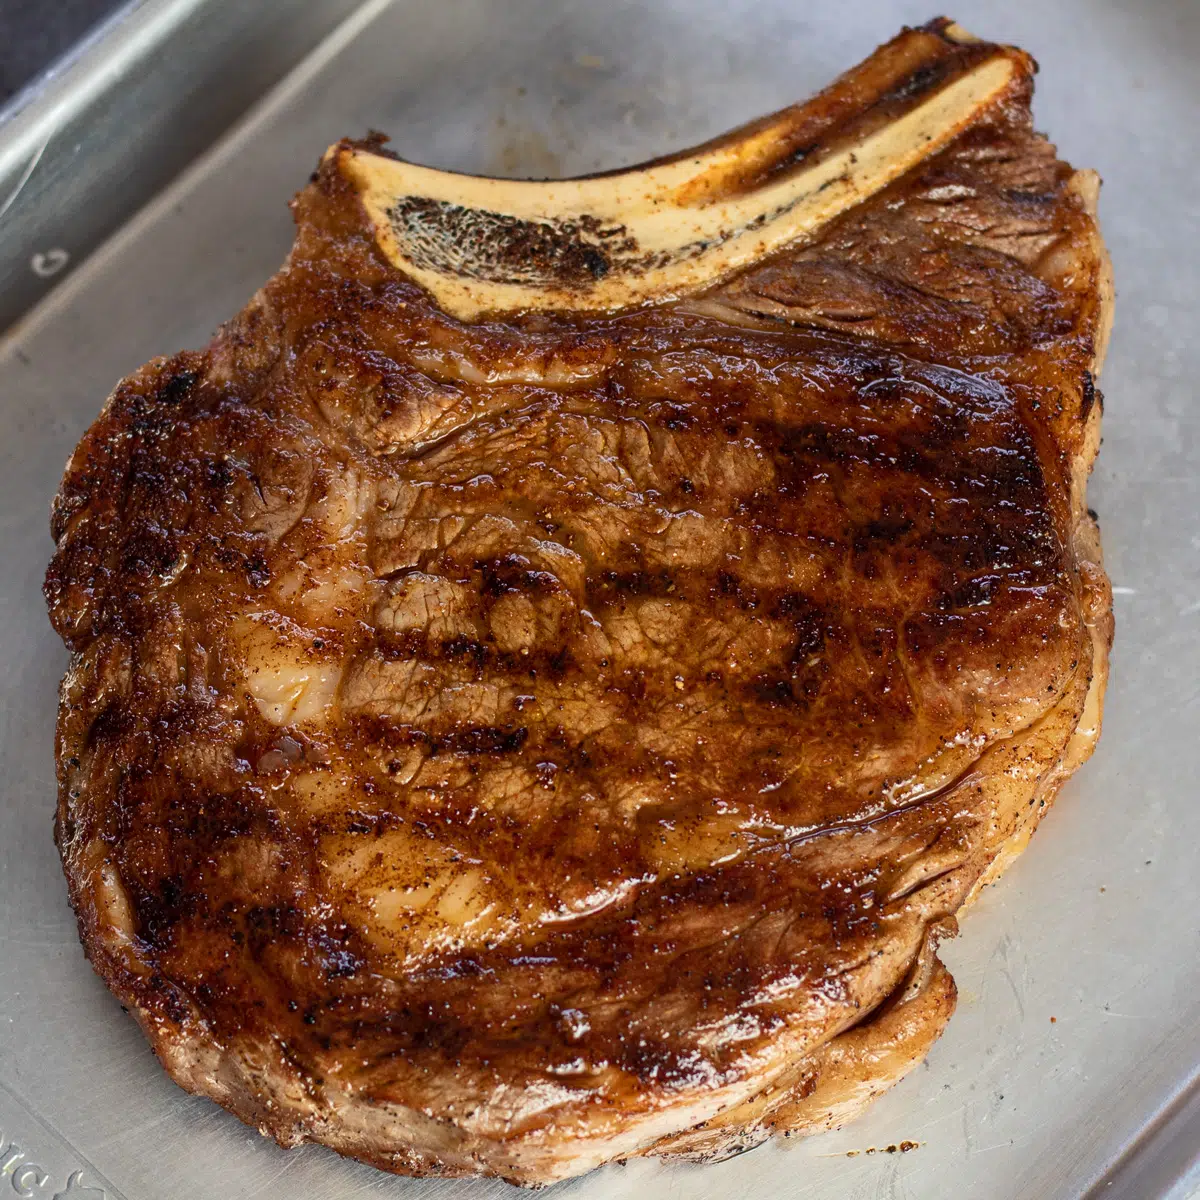 Di atas kepala persegi steak ribeye koboi panggang sempurna.